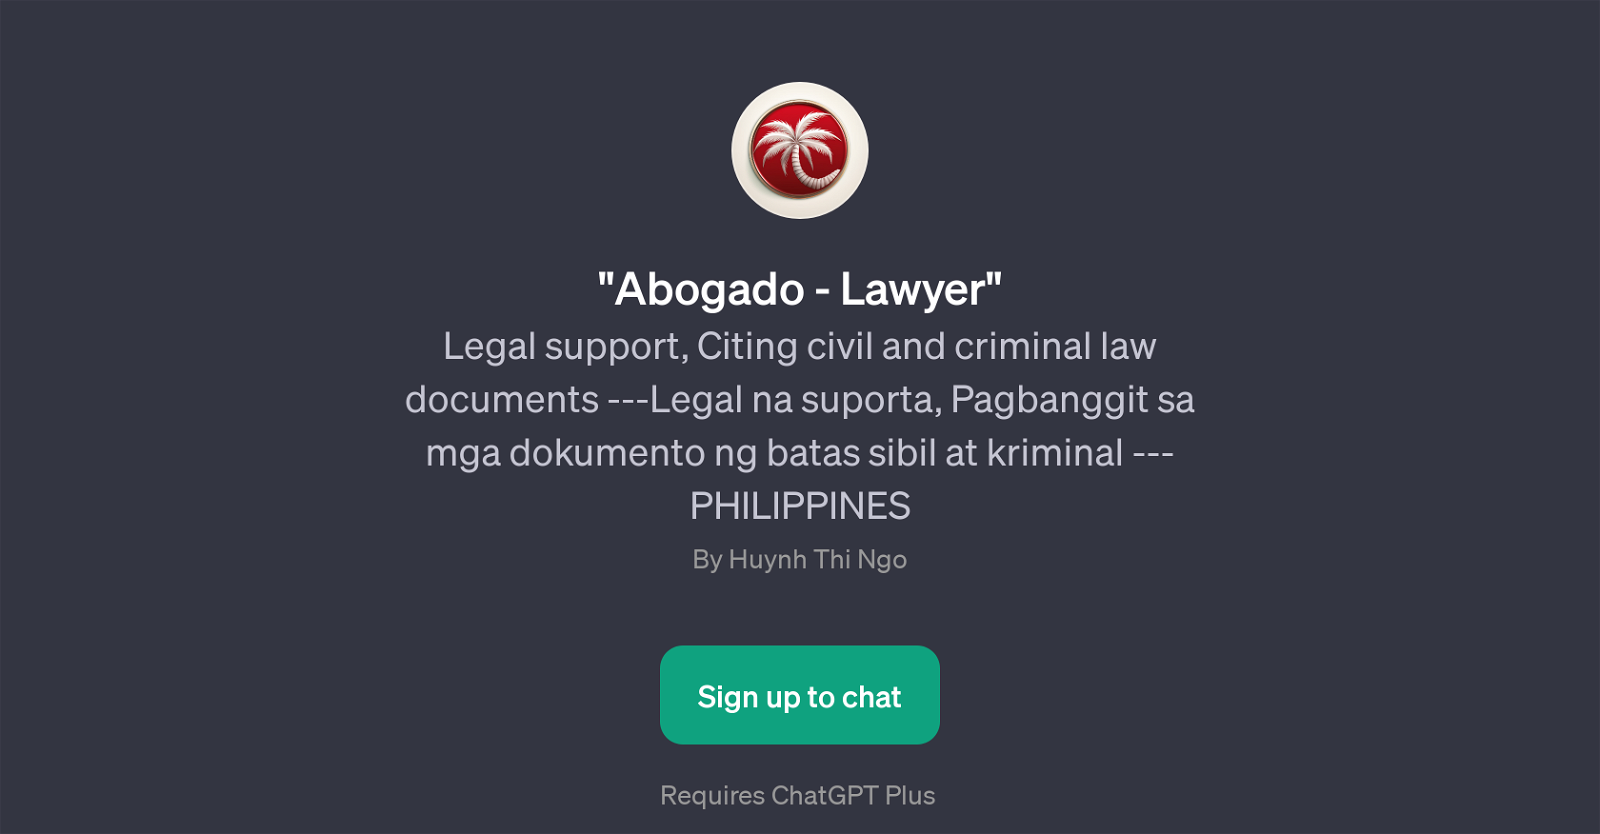 Abogado - Lawyer website